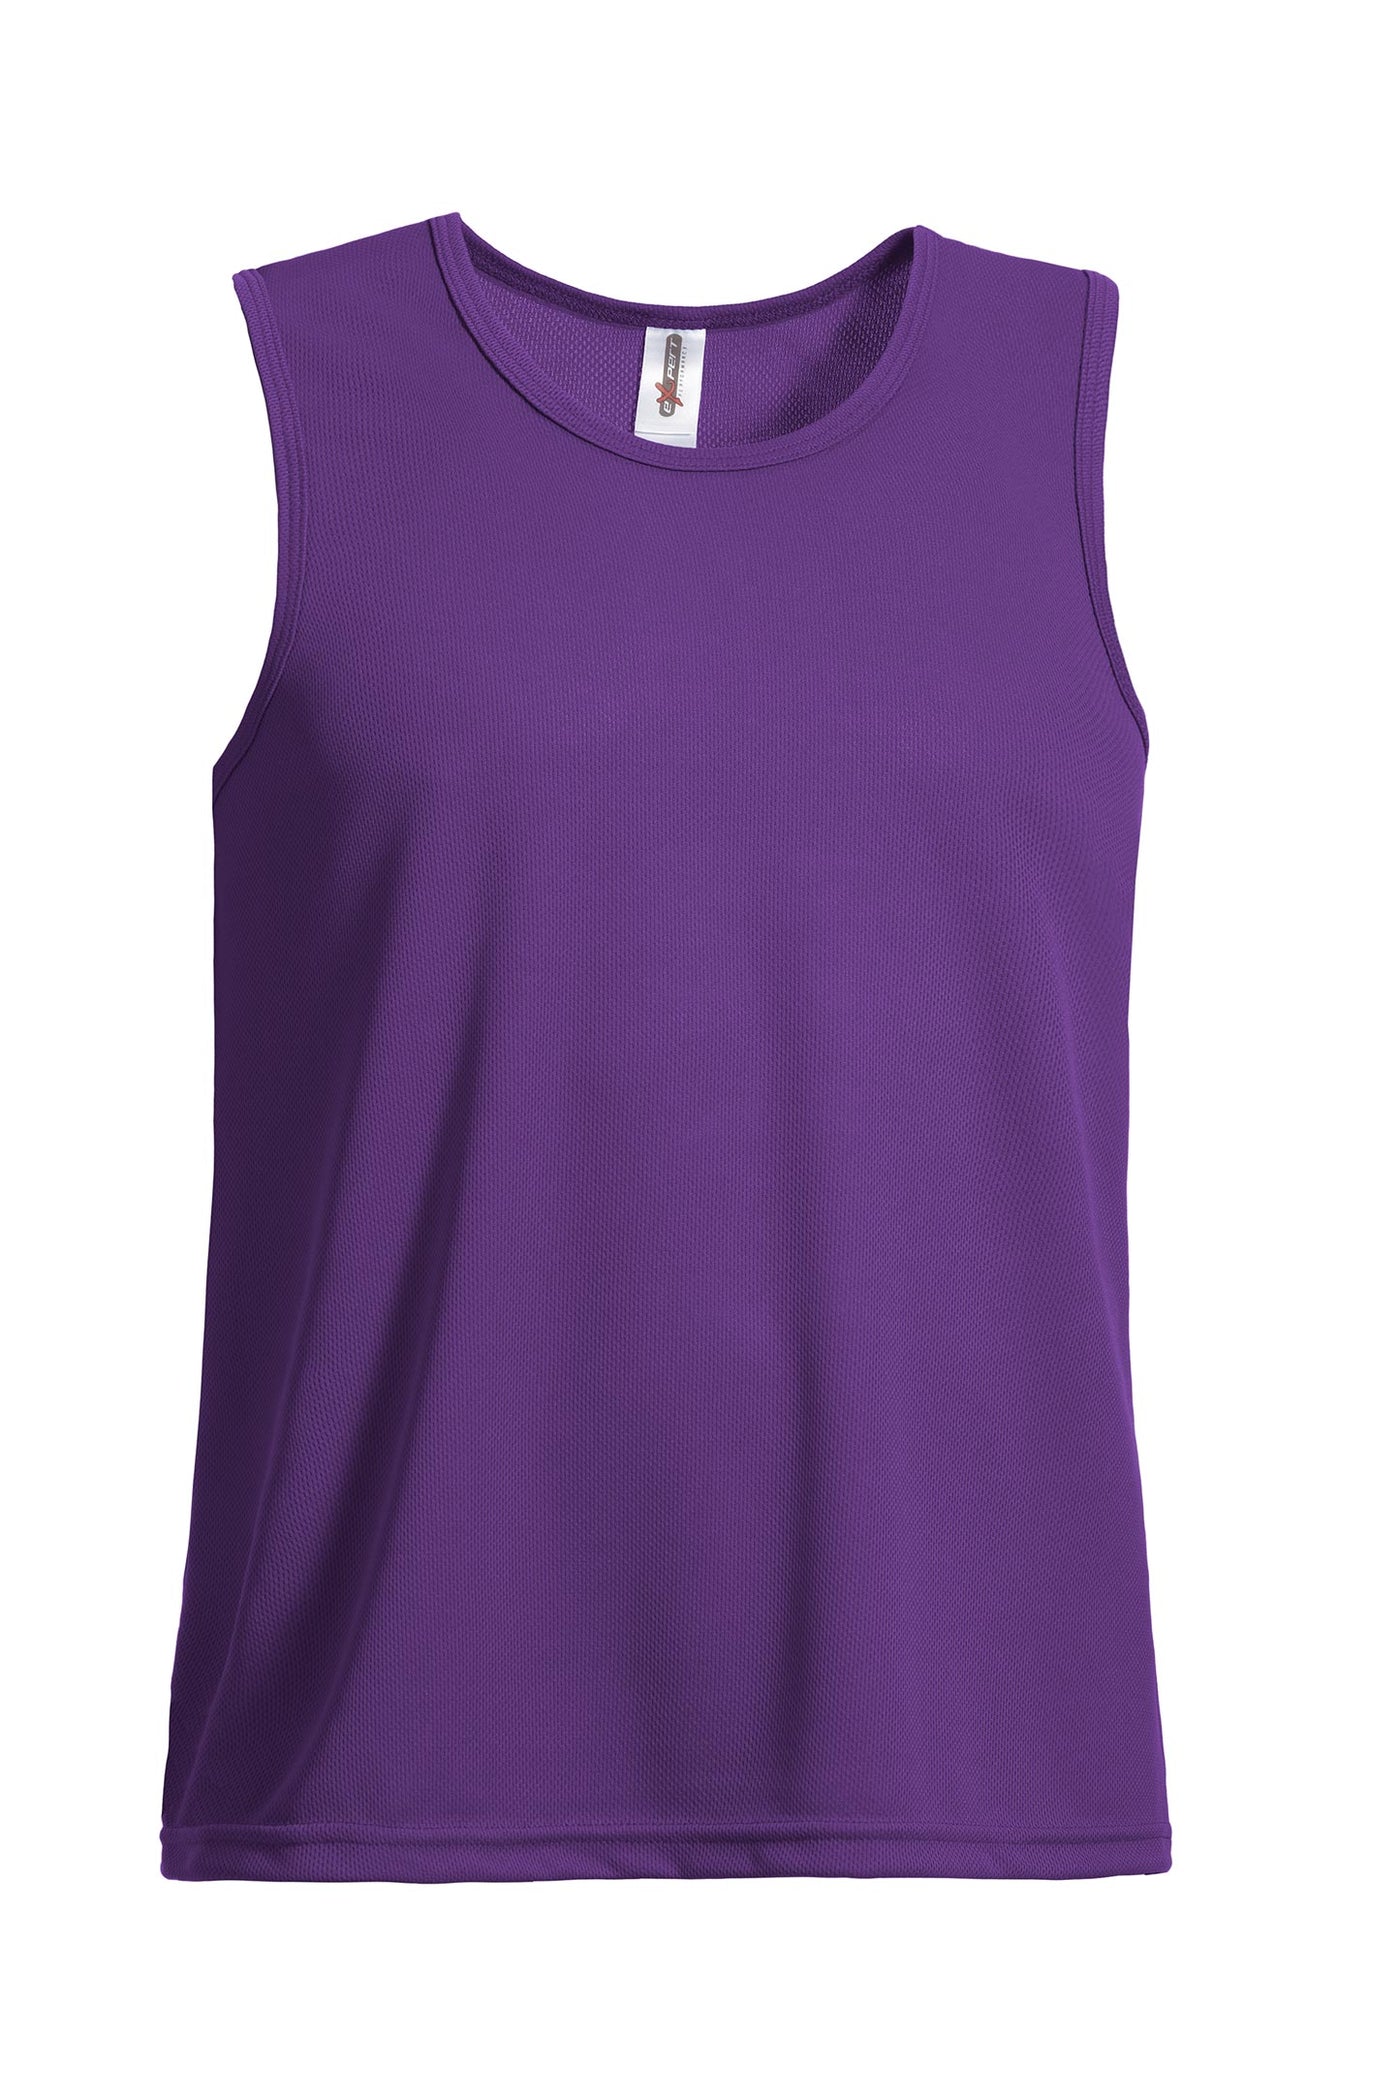 Expert Brand Retail Men's Oxymesh Tank Top Made in USA dark purple#color_dark-purple